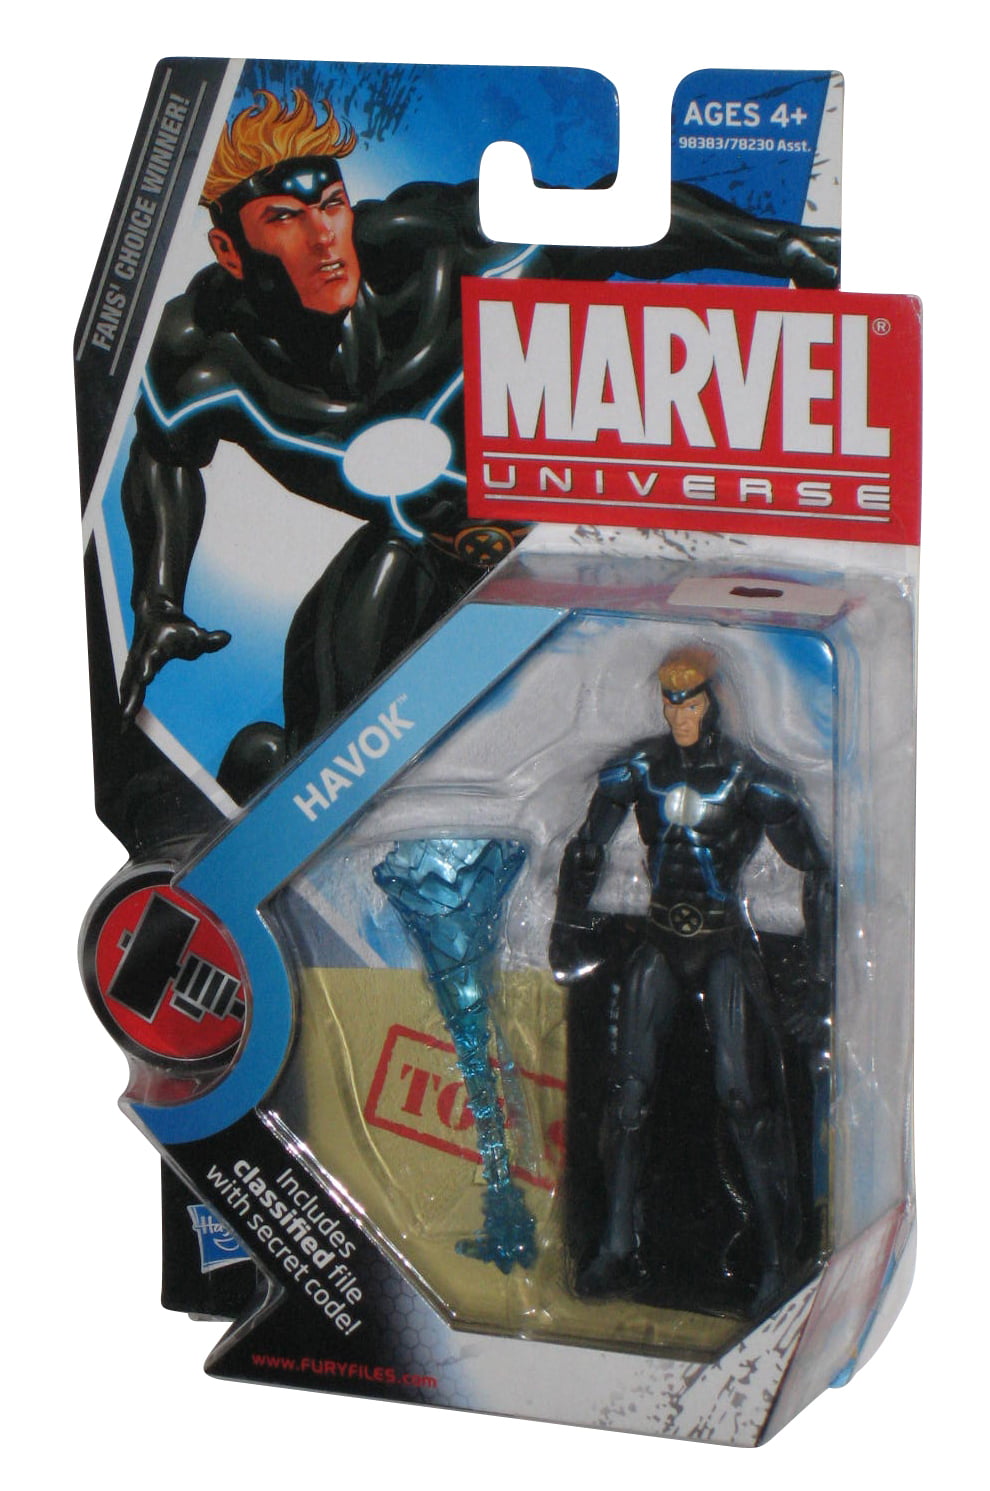 Marvel Universe Série 2 #018 Havok loose 3.75" ACTION FIGURE x-men Hasbro 2010 